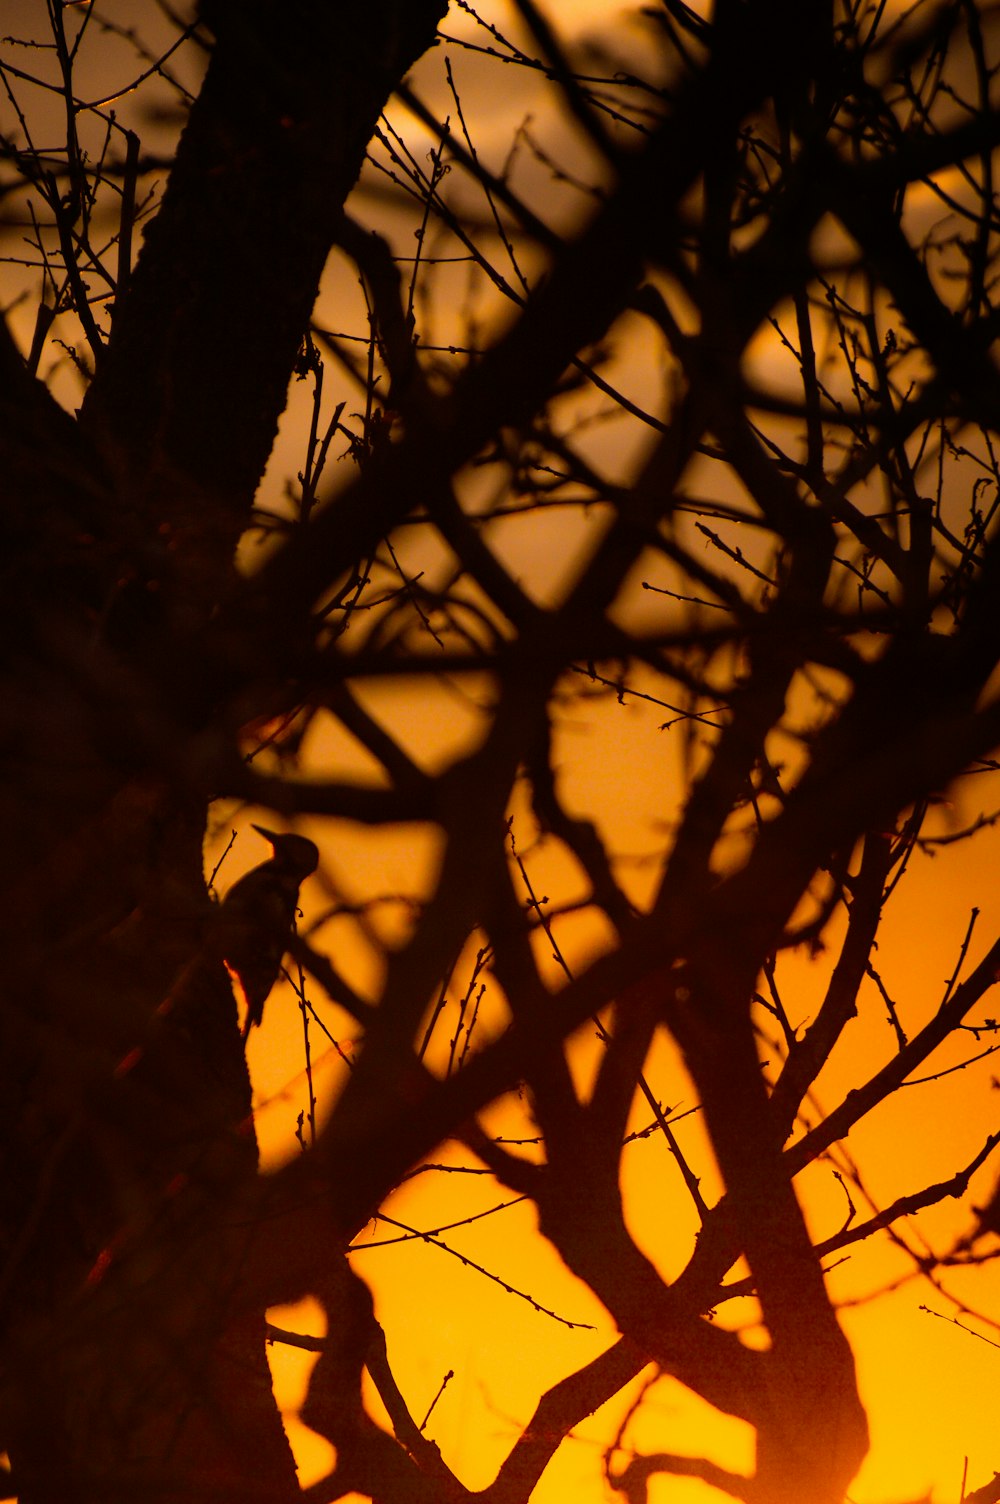 a giraffe standing next to a tree at sunset